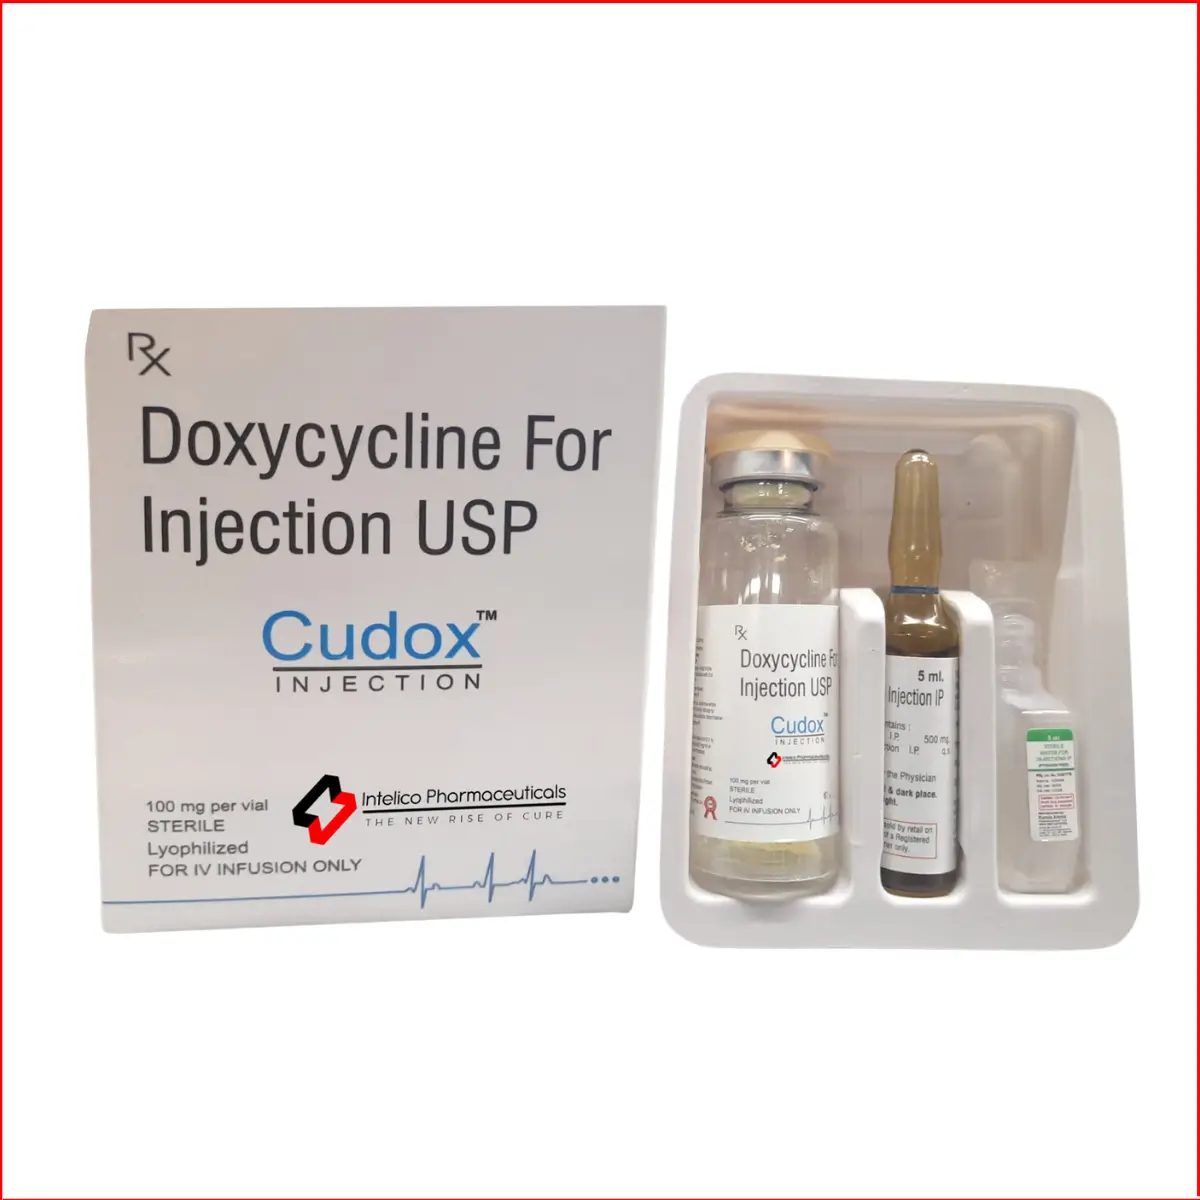 Doxycycline for Injection USP